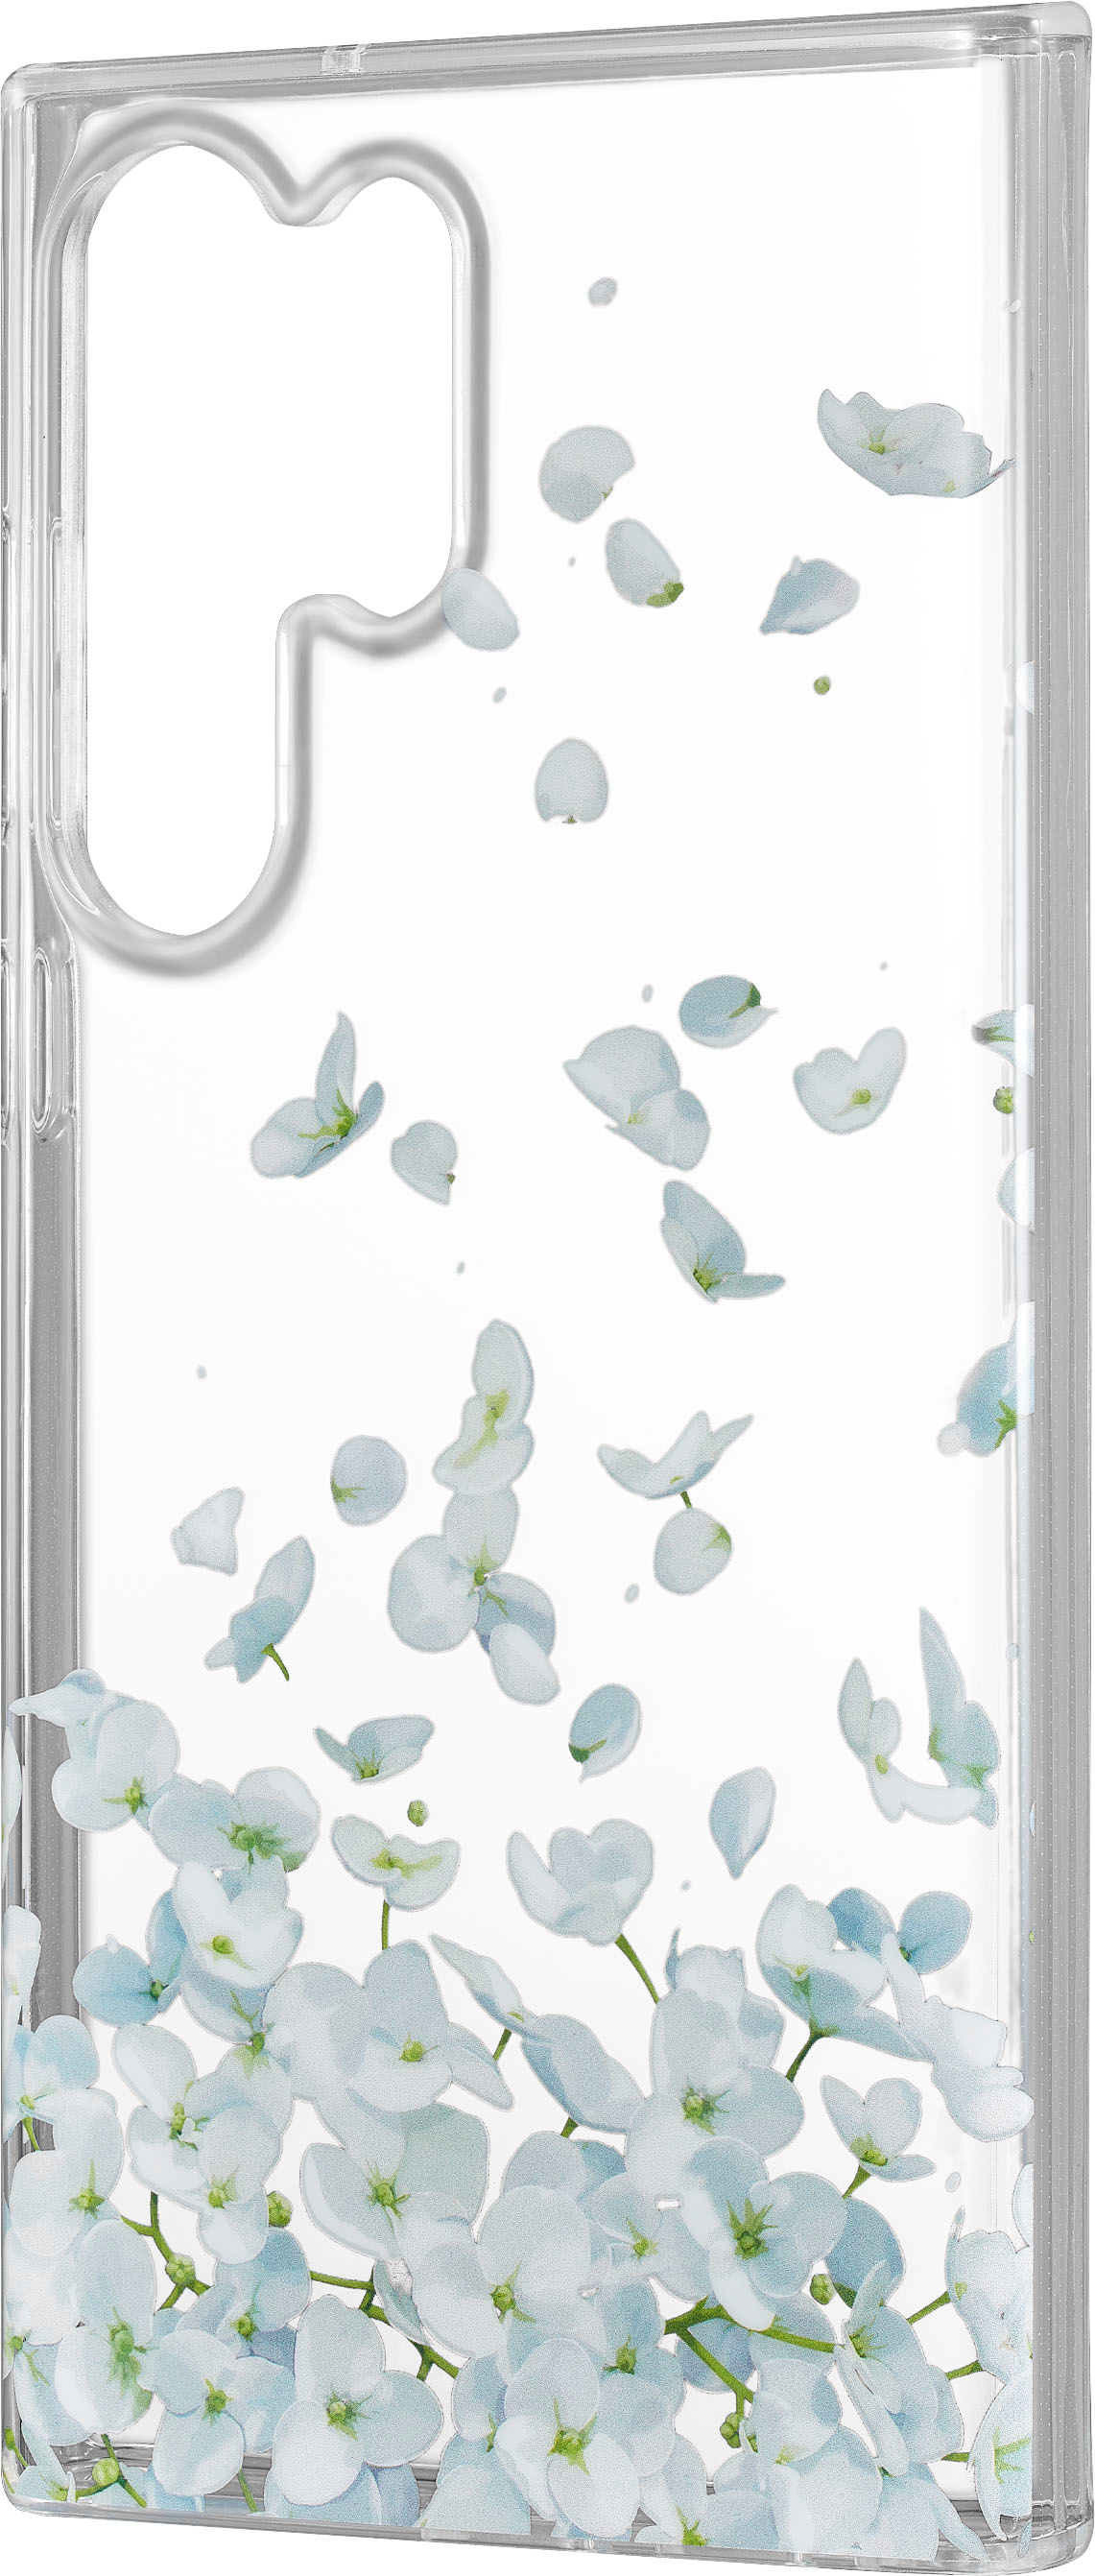 Insignia - Hard-Shell Case for Samsung Galaxy S23 Ultra - Falling Flower